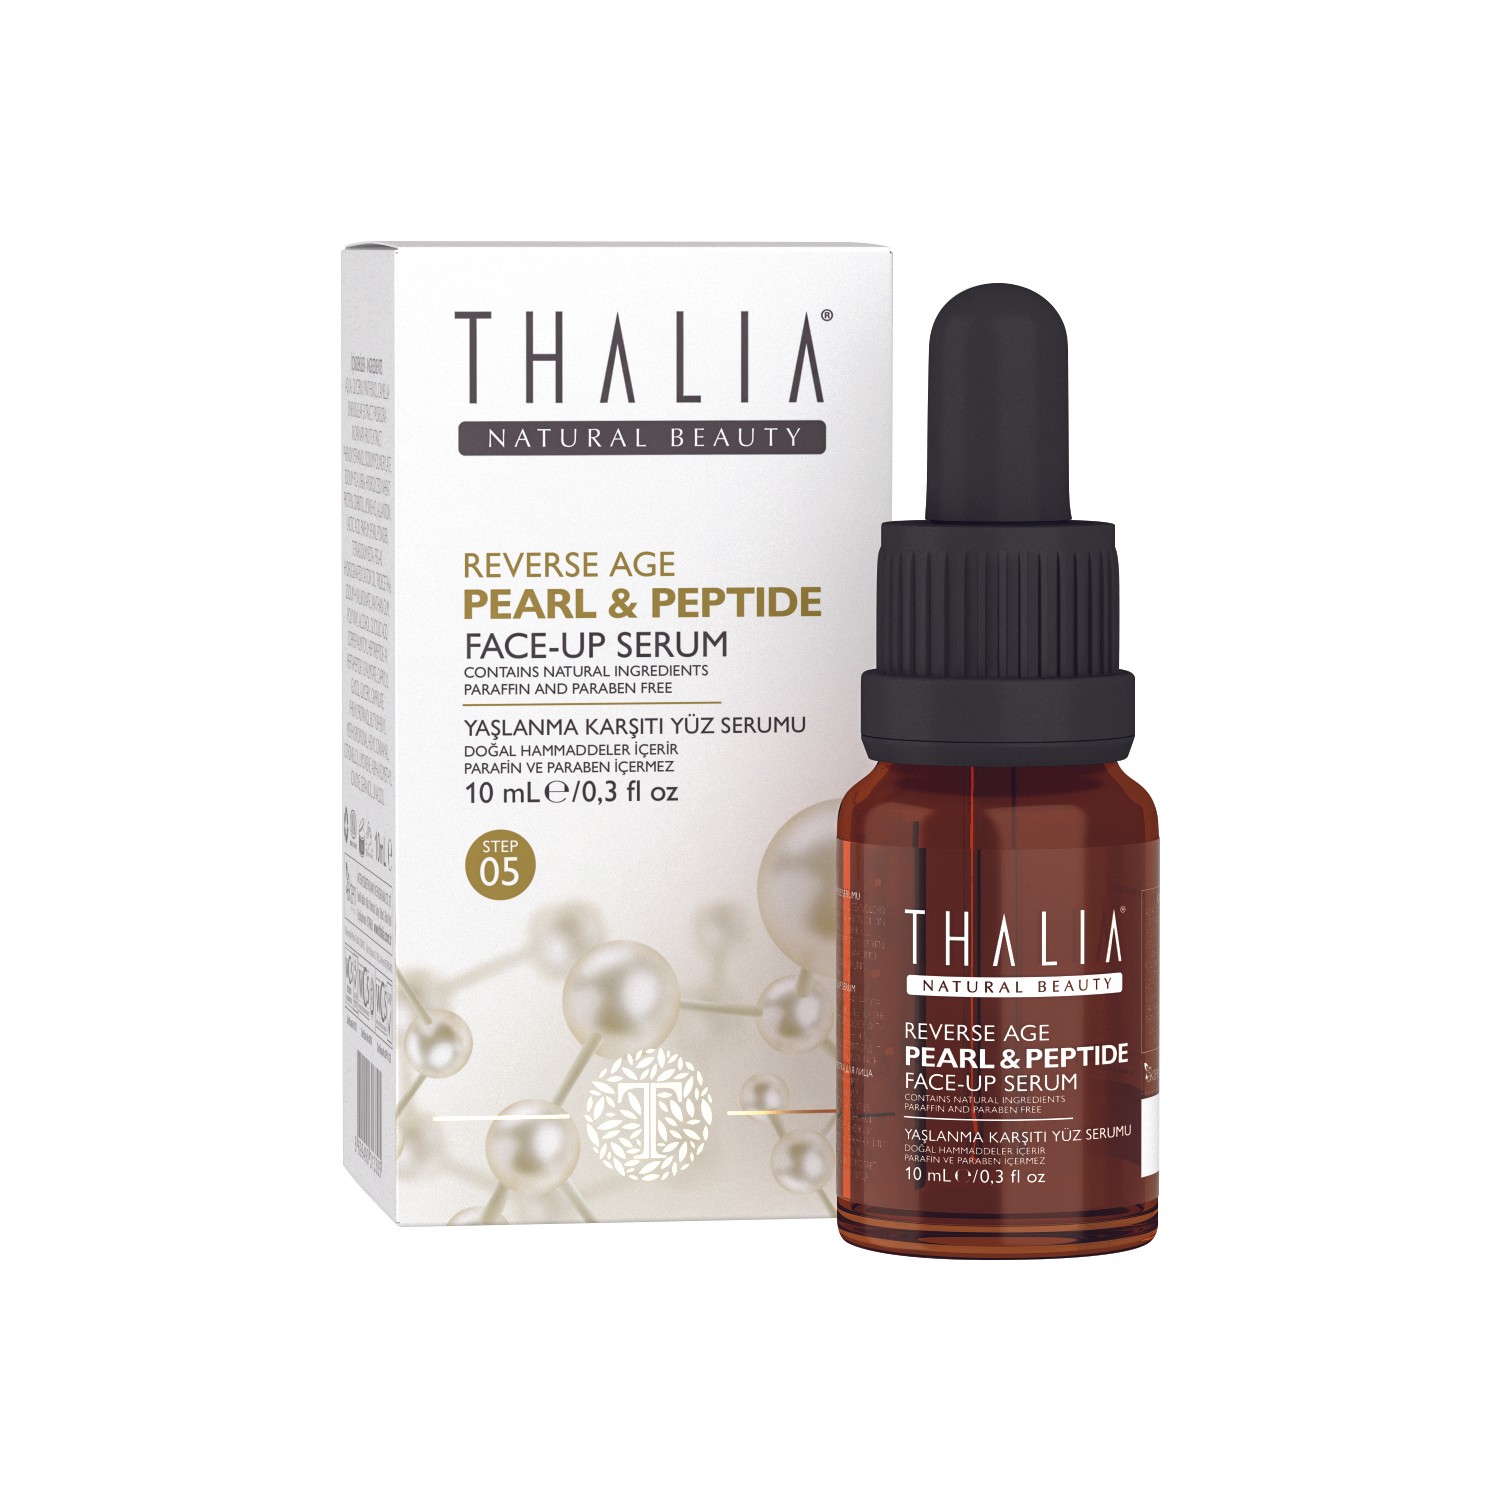 Омолаживающая сыворотка для лица Thalia Pearl & Peptide 40+, 10 мл цена и фото